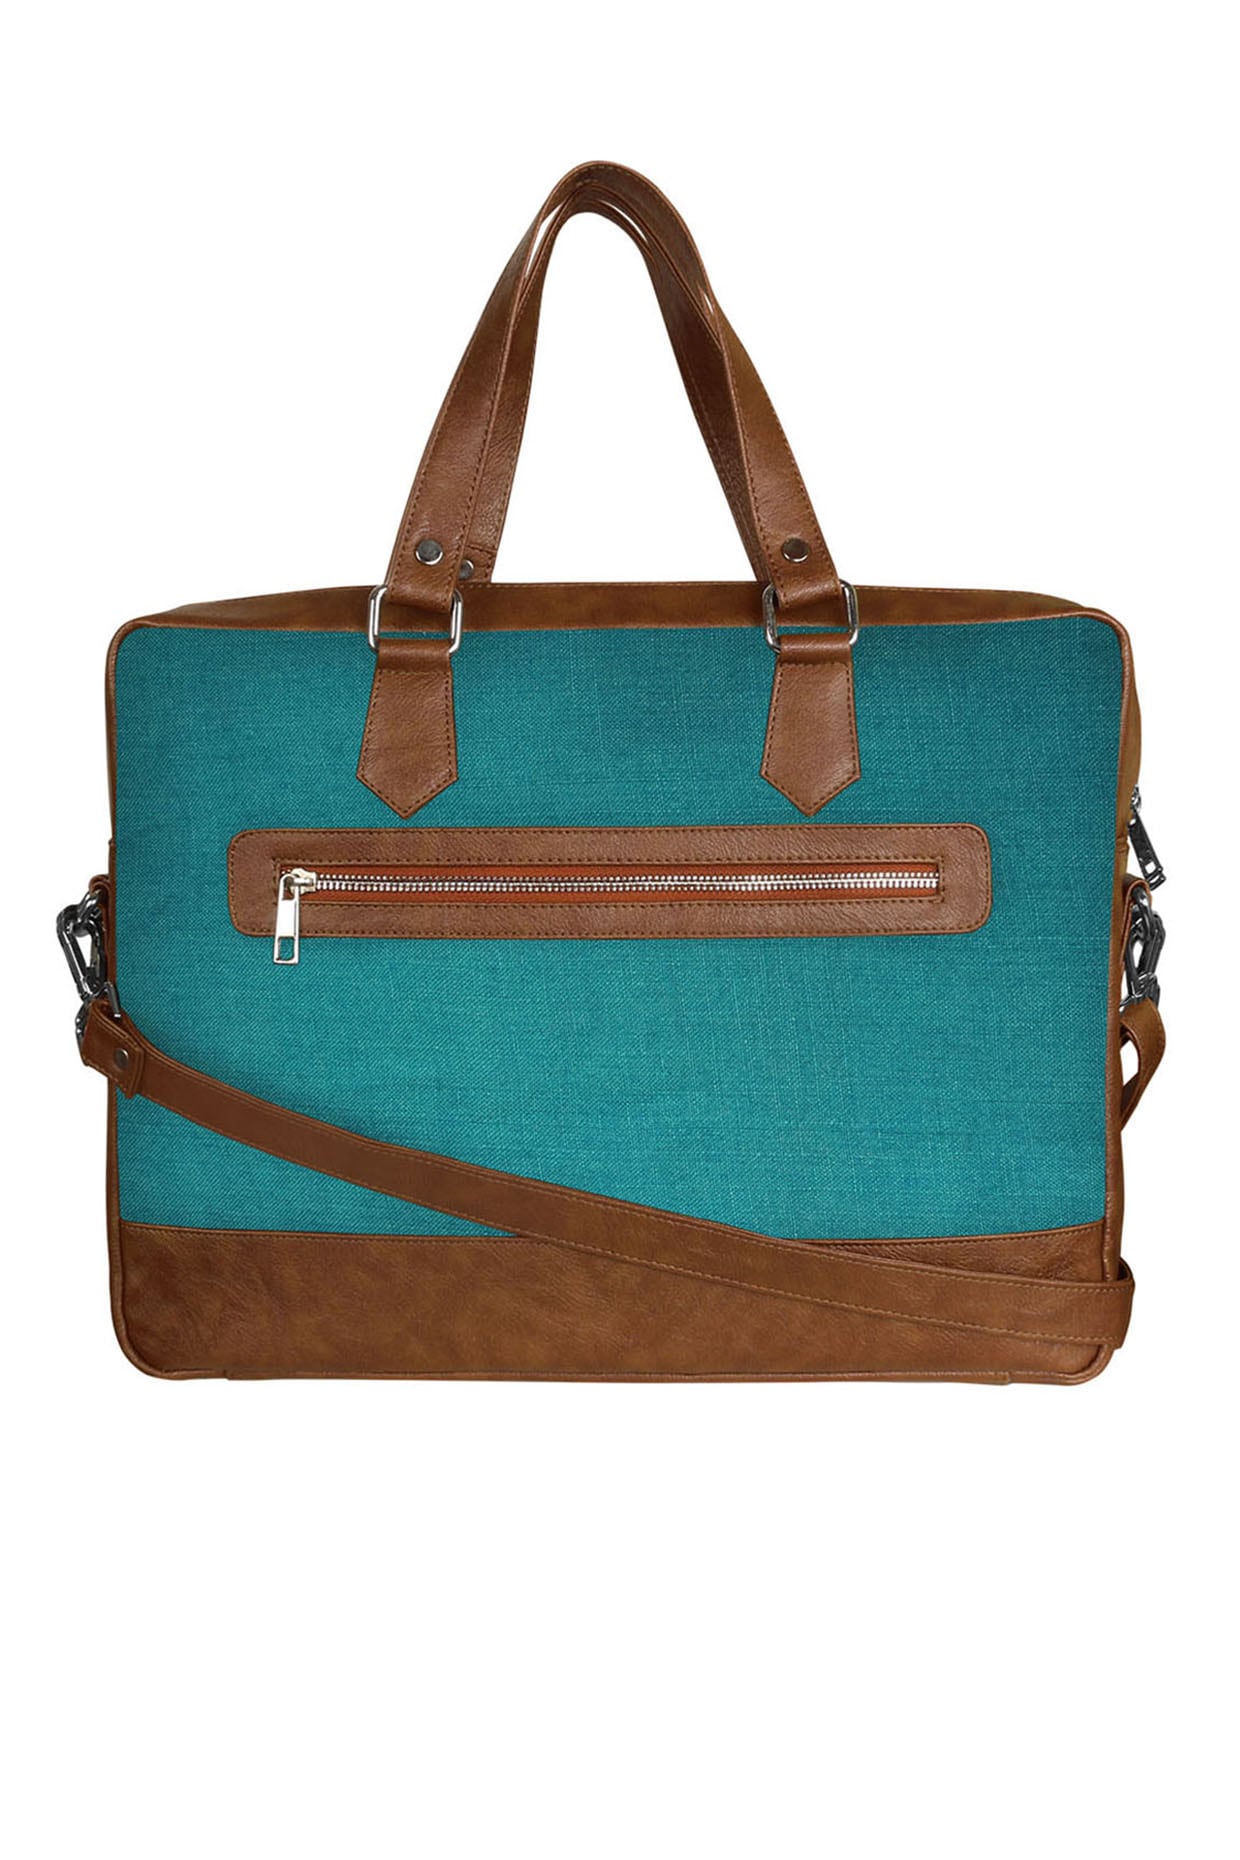 Branded Brown Vegan Leather Laptop Bag  50 Off At Kinnoti